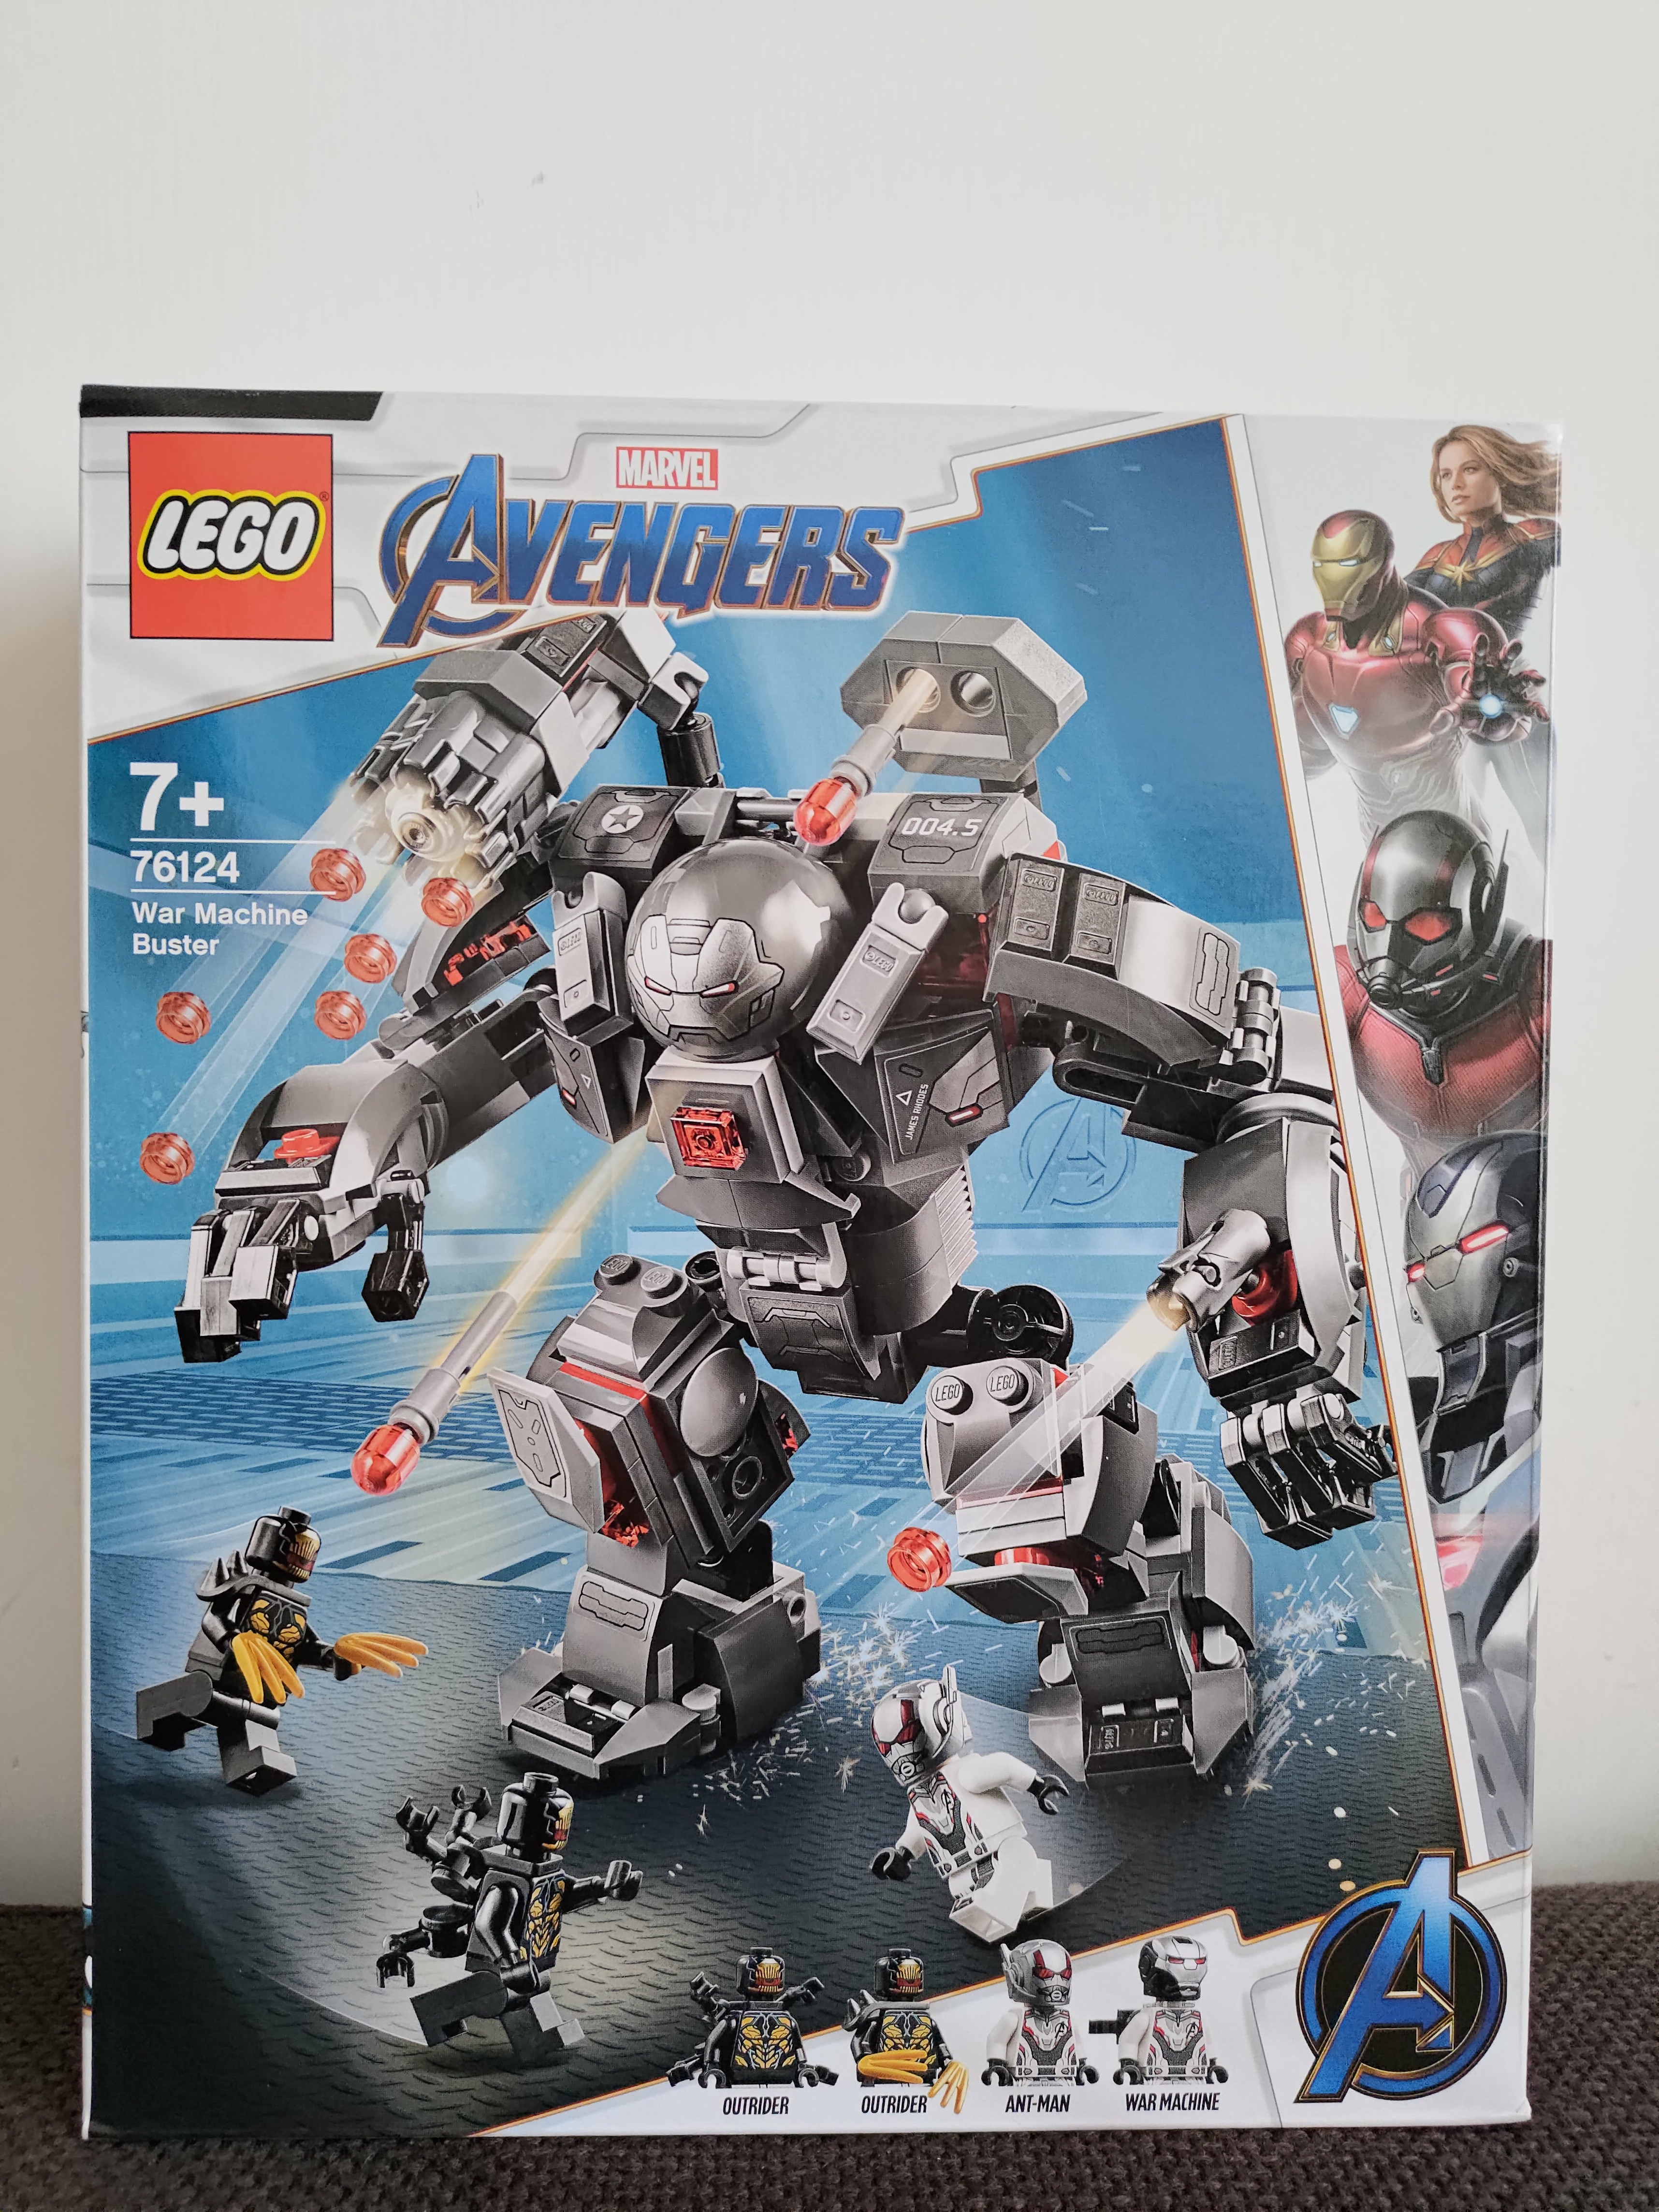 Marvel Avengers Lego, War Machine Buster (76124), 興趣及遊戲, 玩具